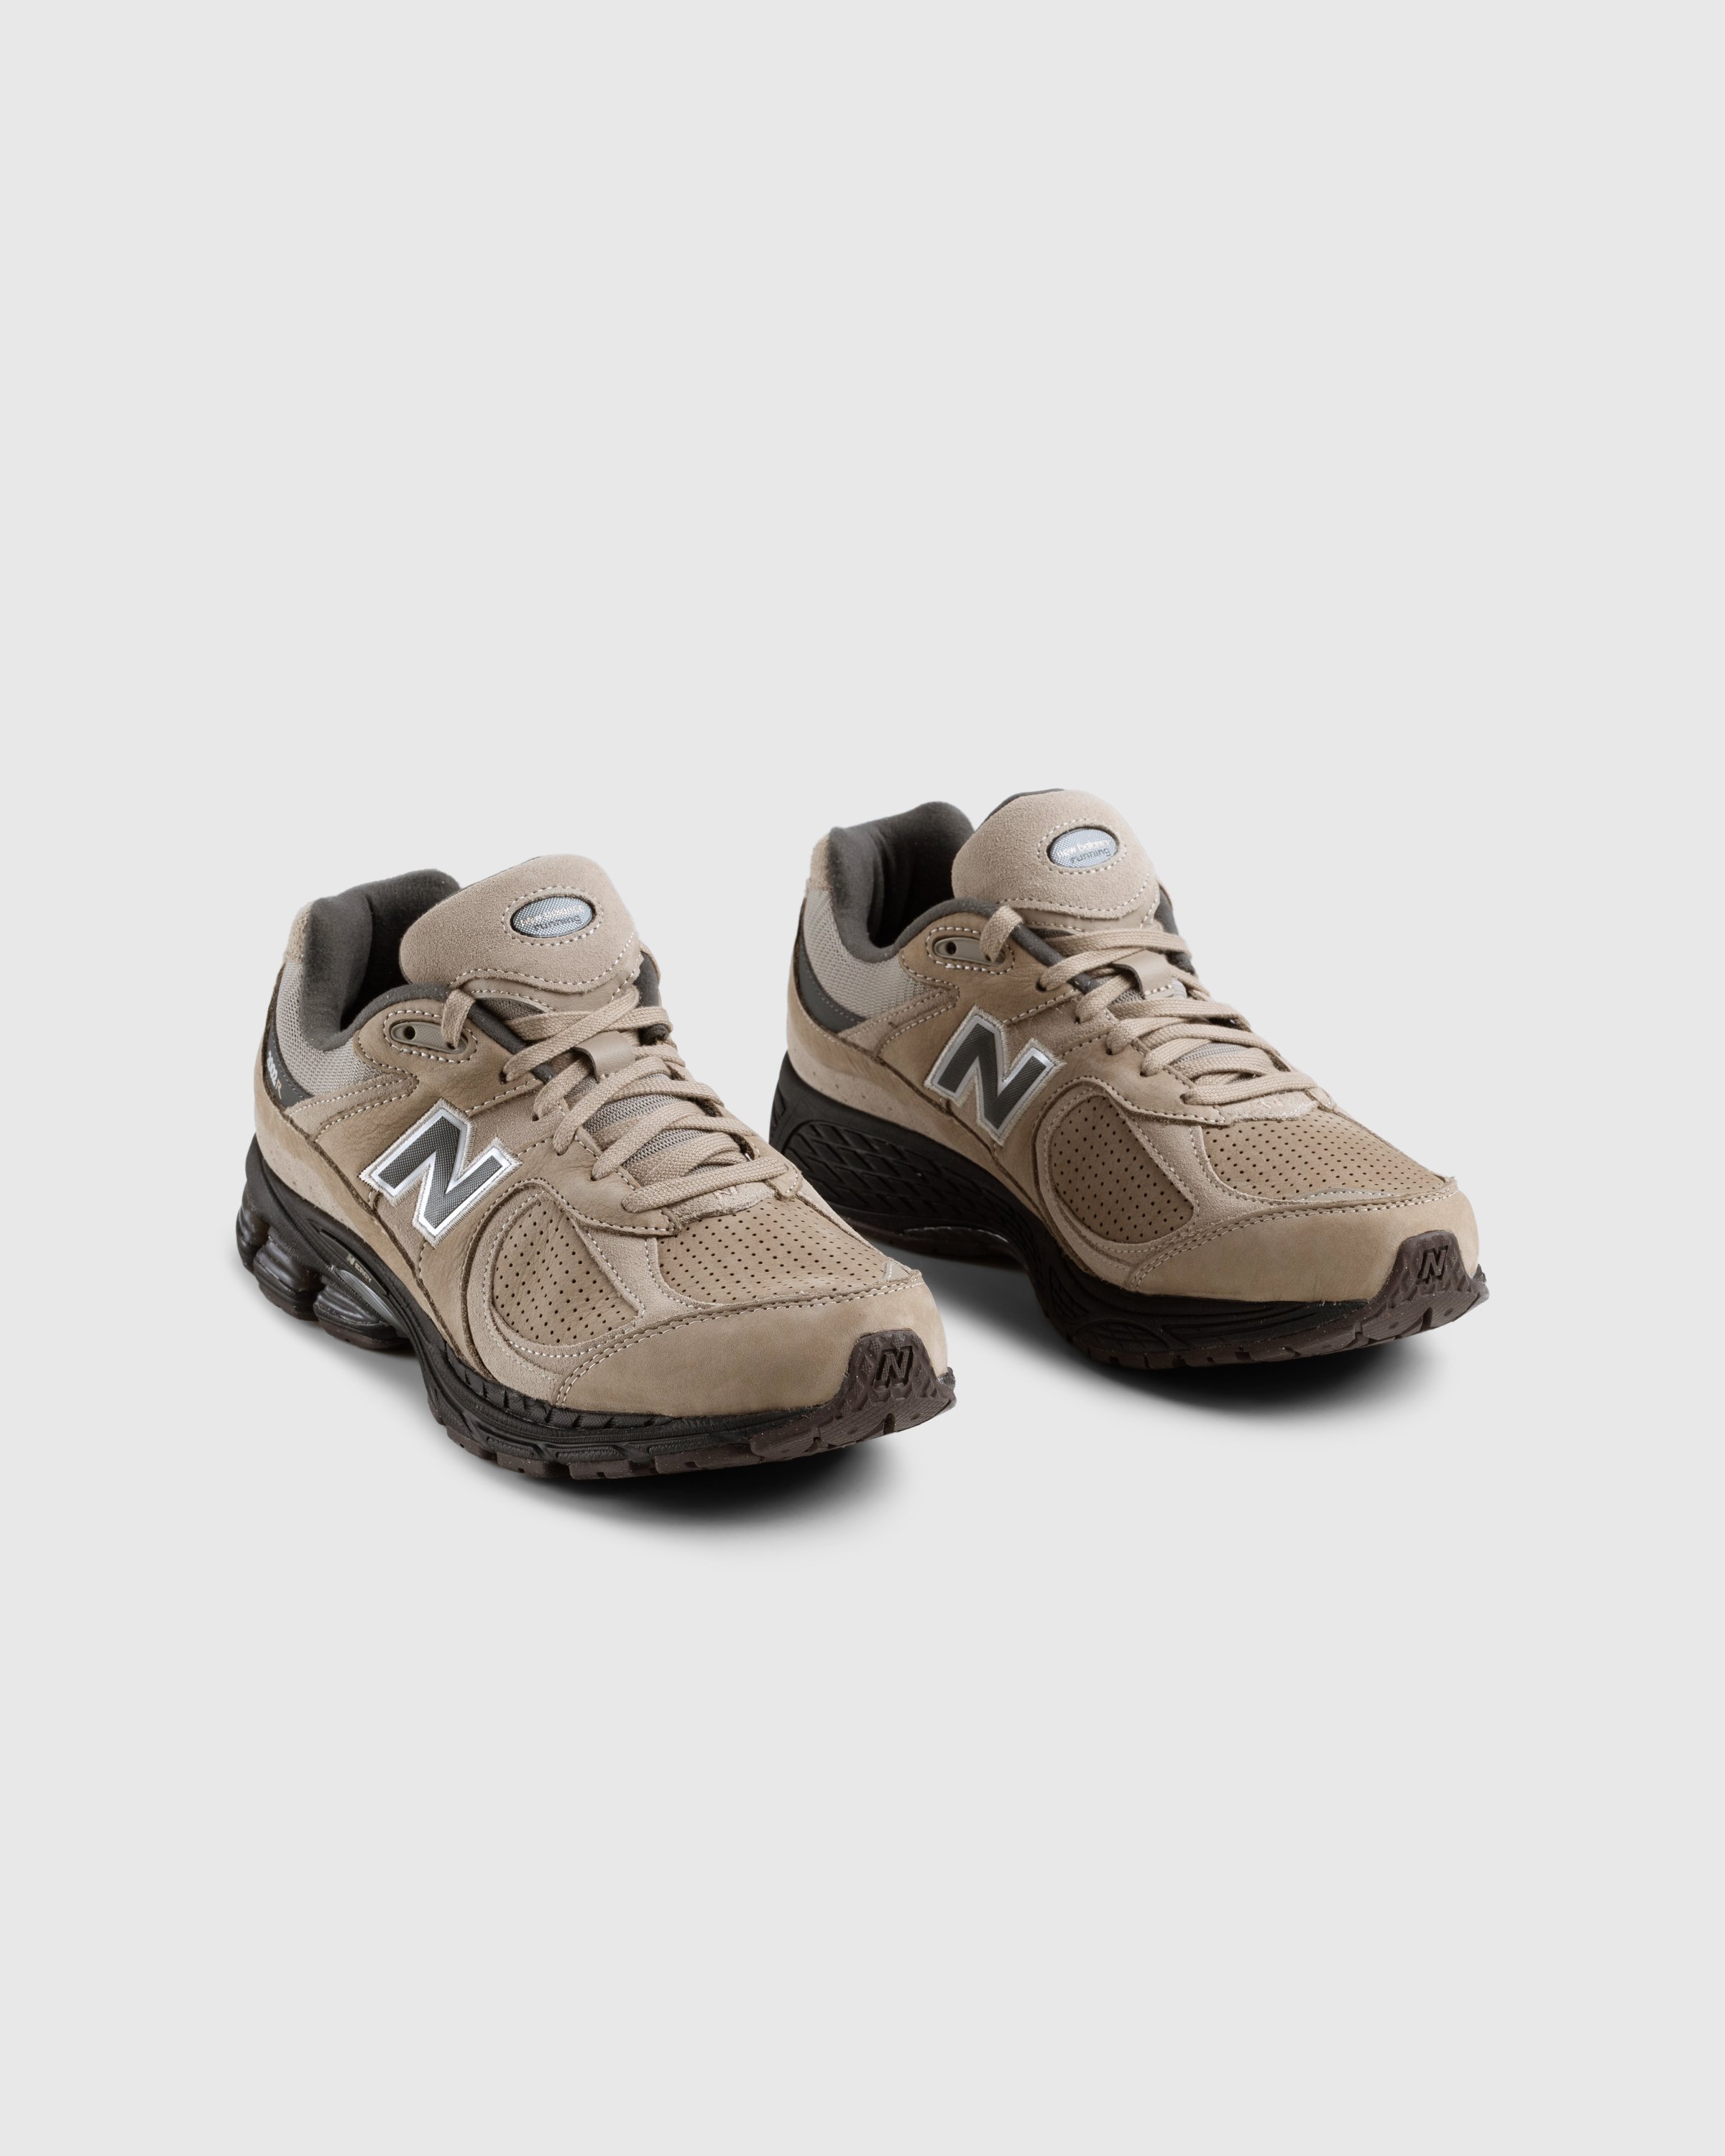 New Balance - M 2002 REG Driftwood - Footwear - Brown - Image 3